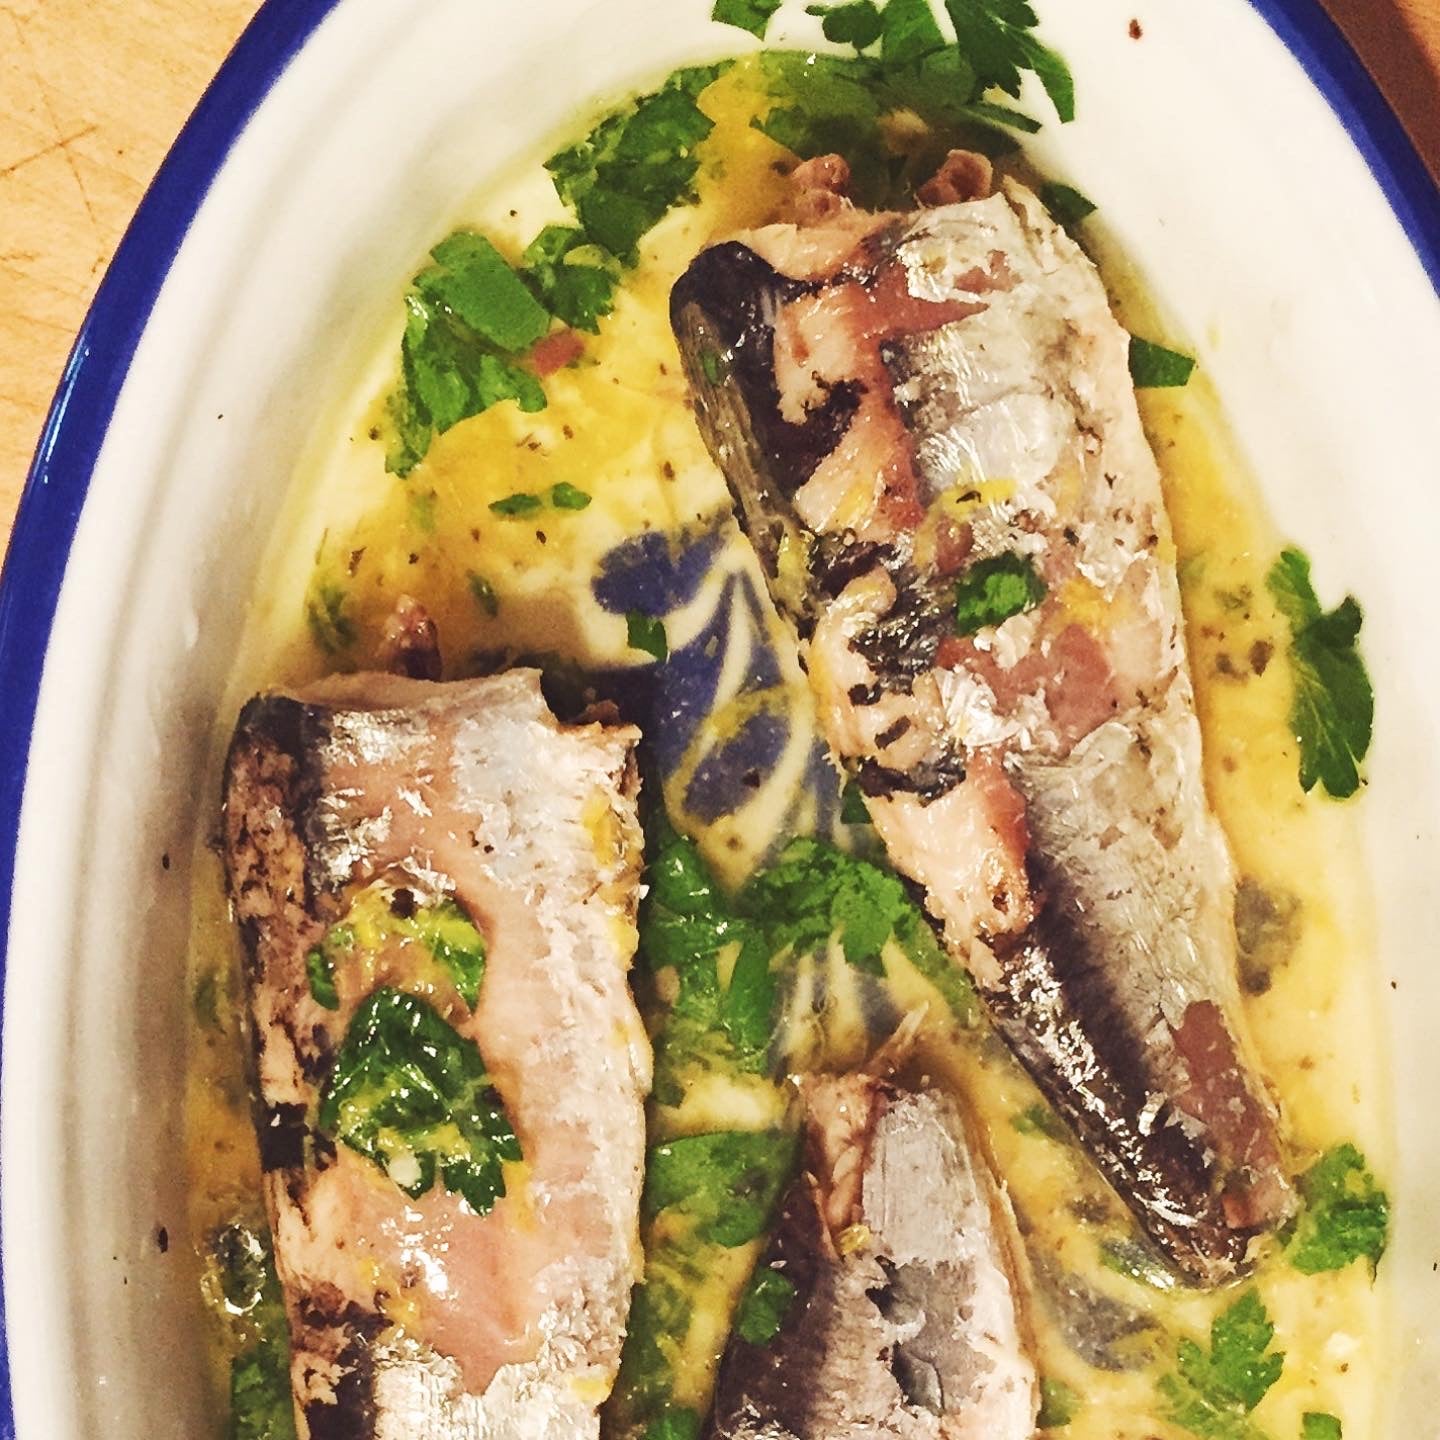 Sardines in olive oil marinating - Donostia Foods